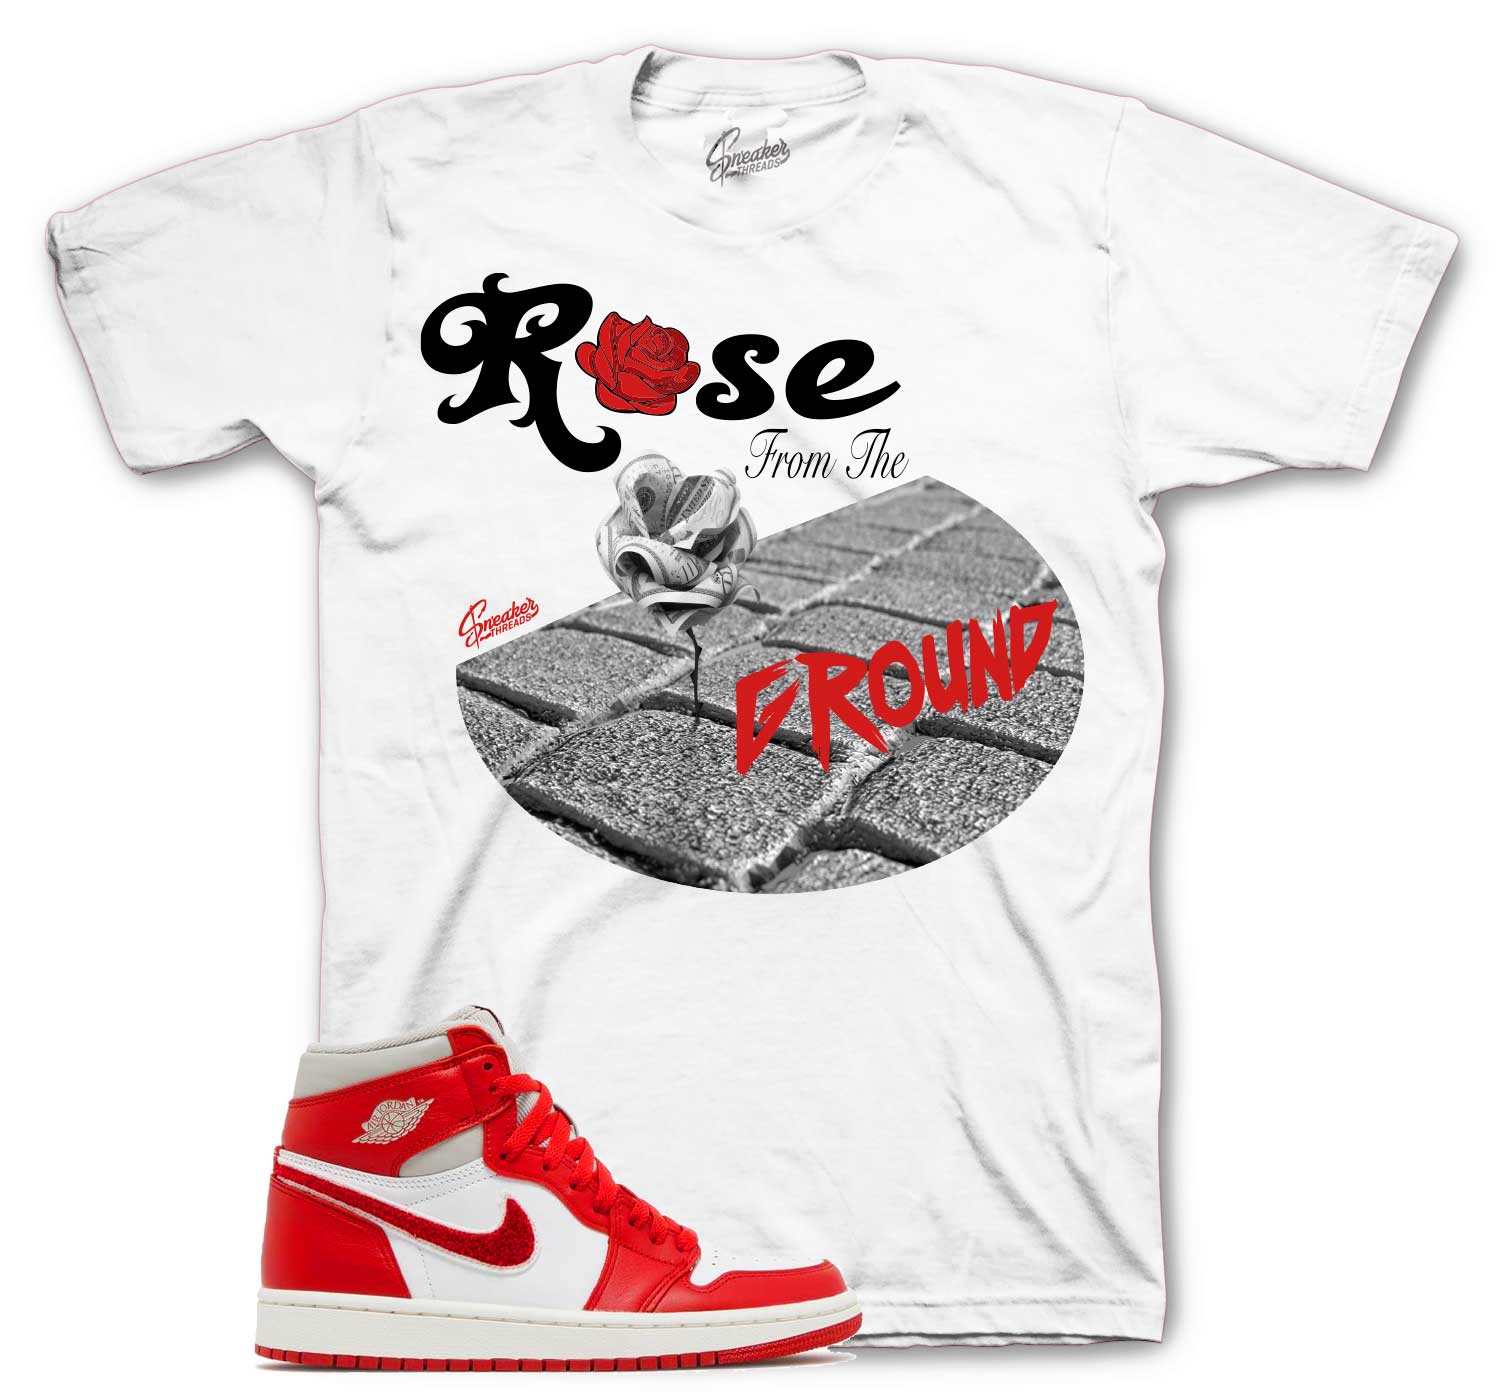 Retro 1 Newstalgia Shirt - Ground Rose - White